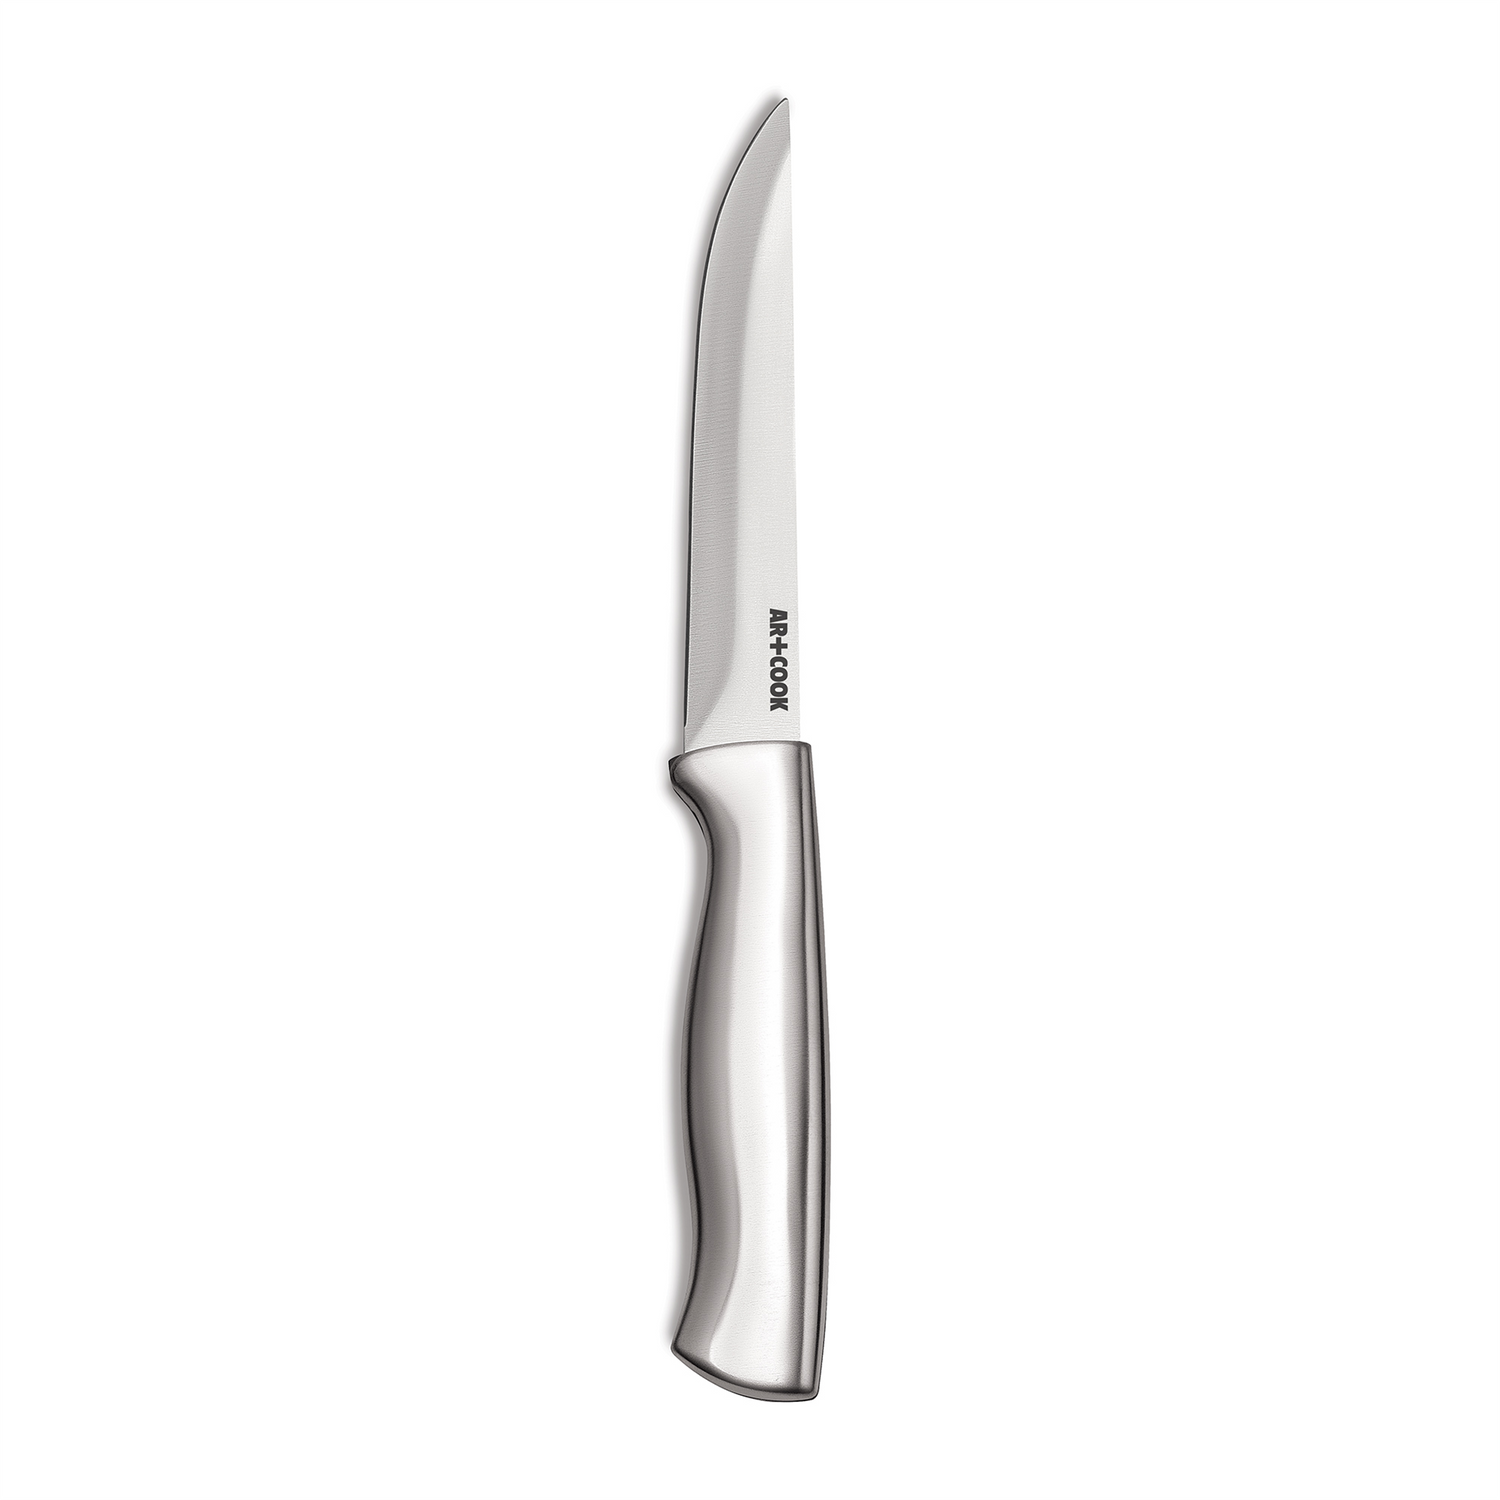 Art & Cook 15-Pc. Stainless Steel Knife Block Set - Macy's